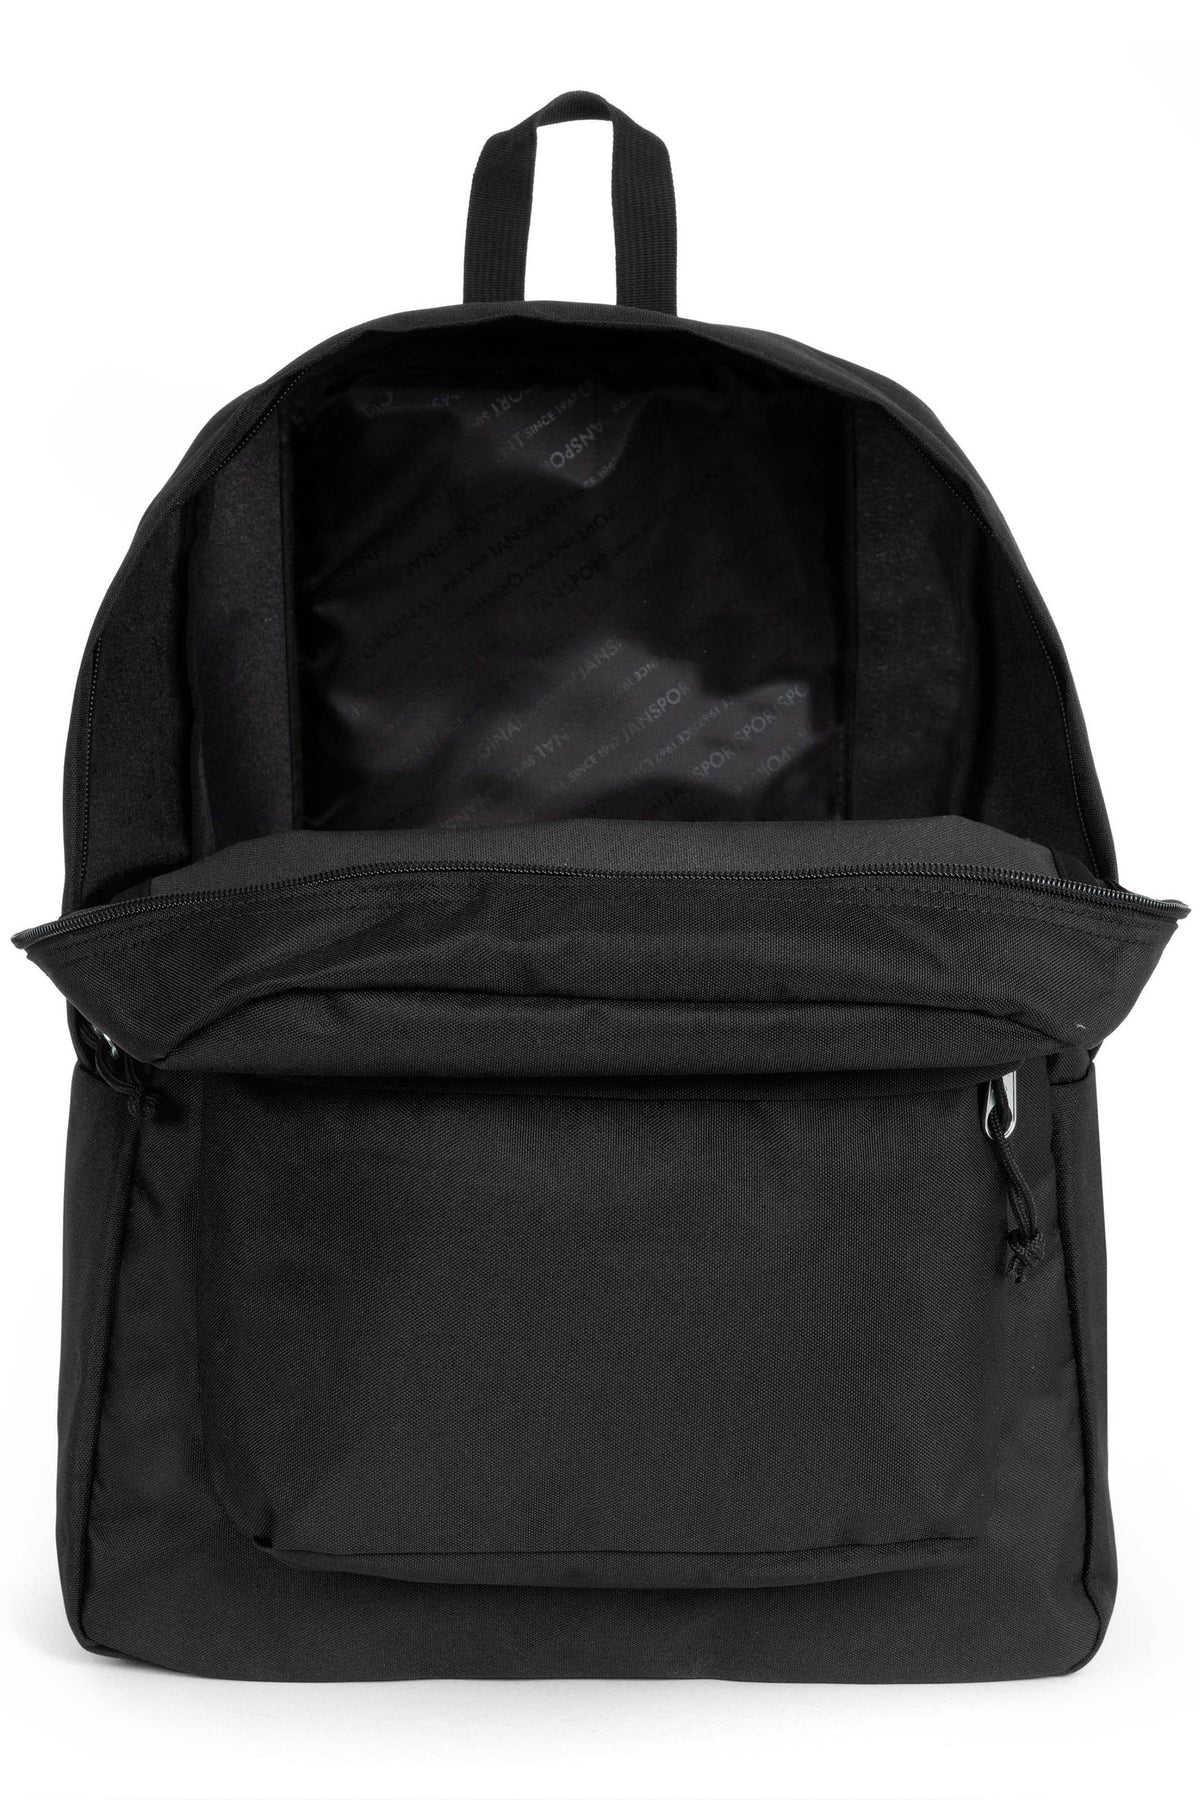 Jansport Superbreak One Backpack - Black – thebackpacker